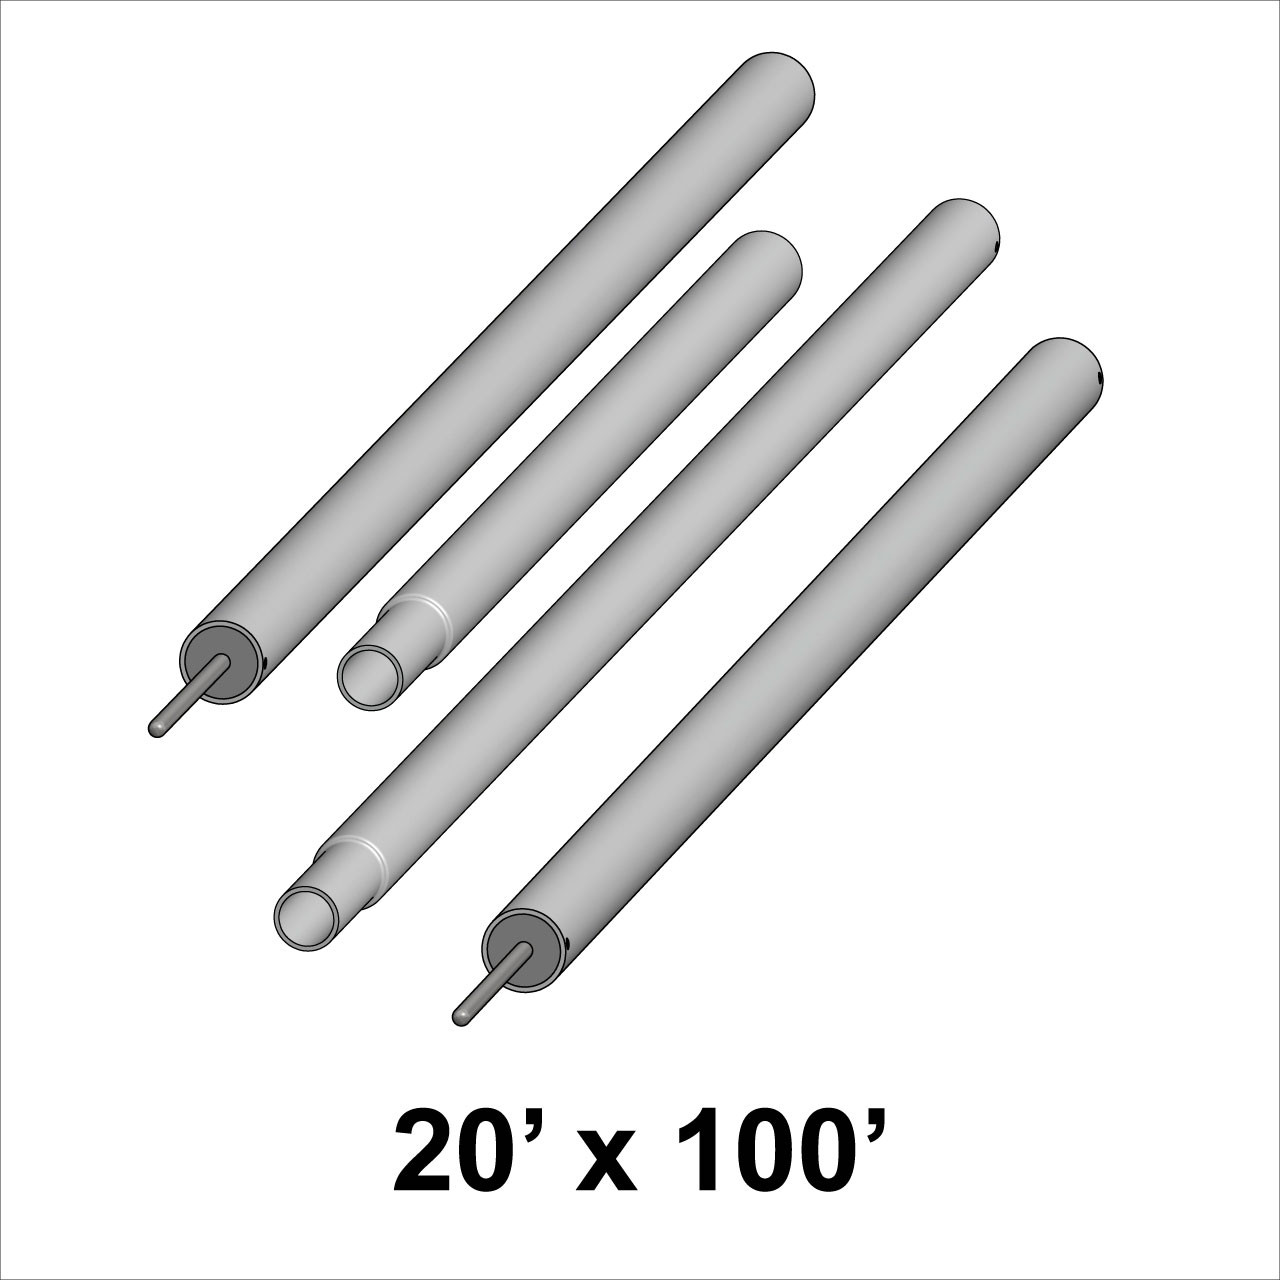 20' x 100' Classic Series Pole Kit